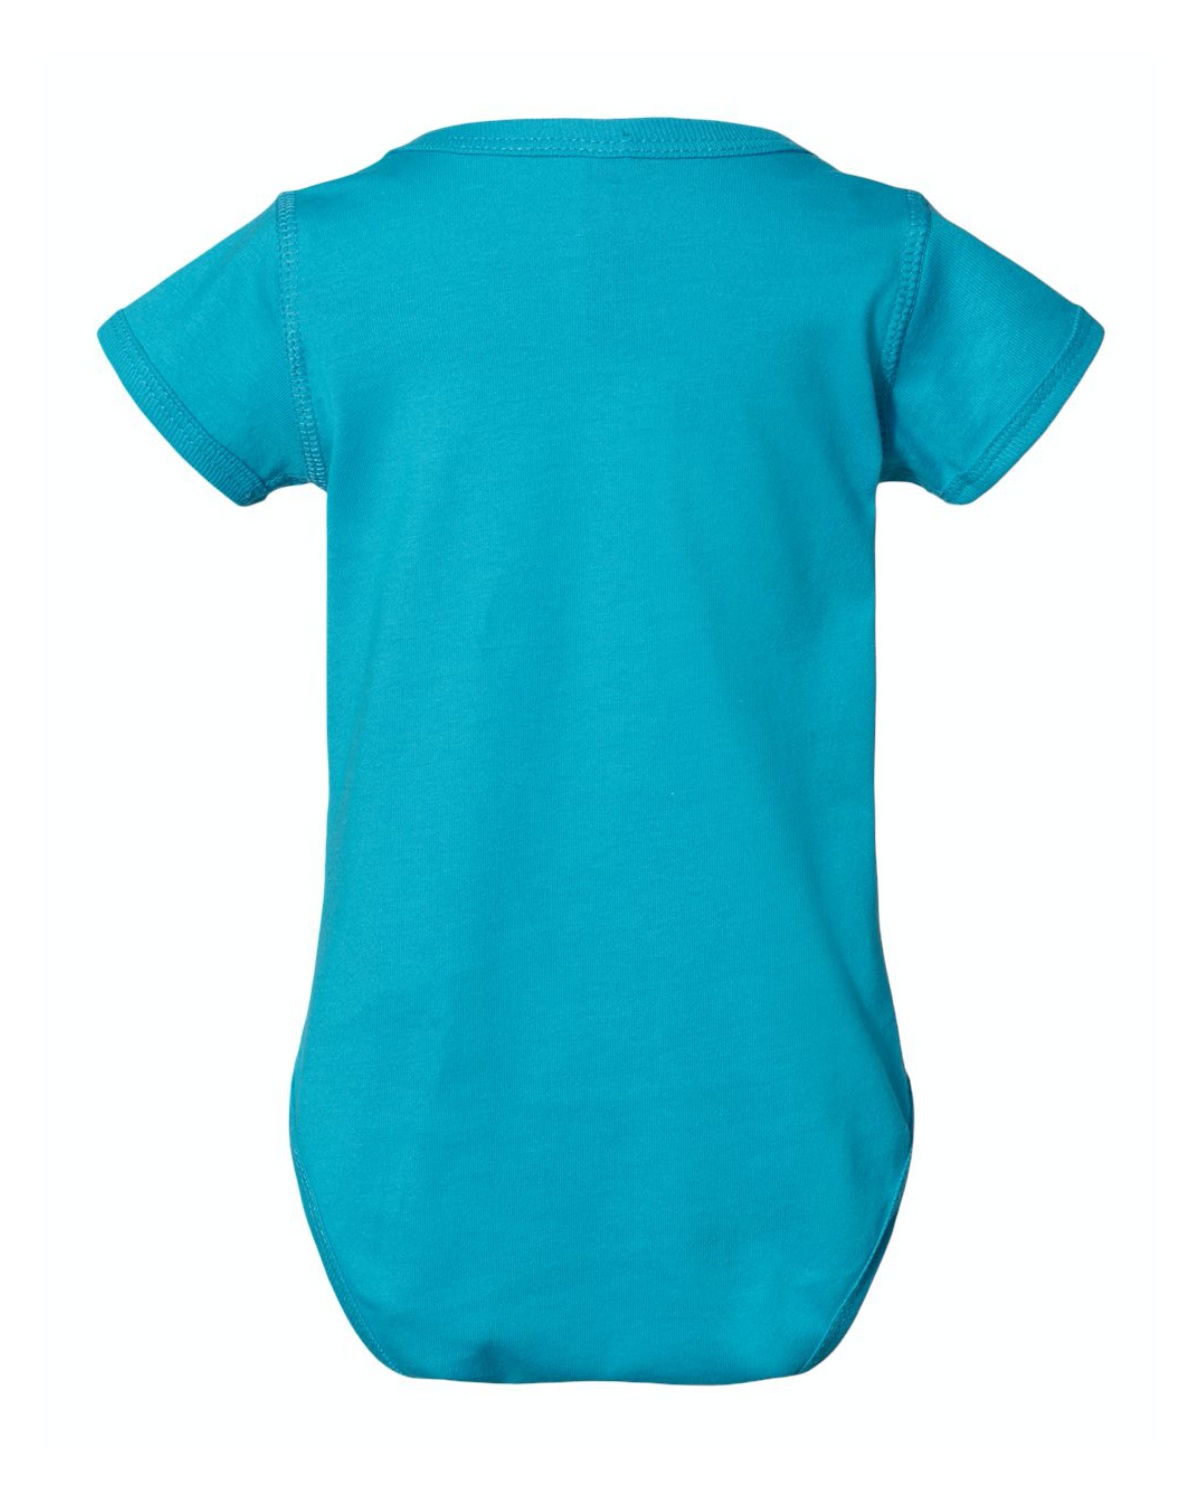 Teenage Mutant Ninja Turtles Birthday Shirt, TMNT Shirt or Bodysuit Onesie